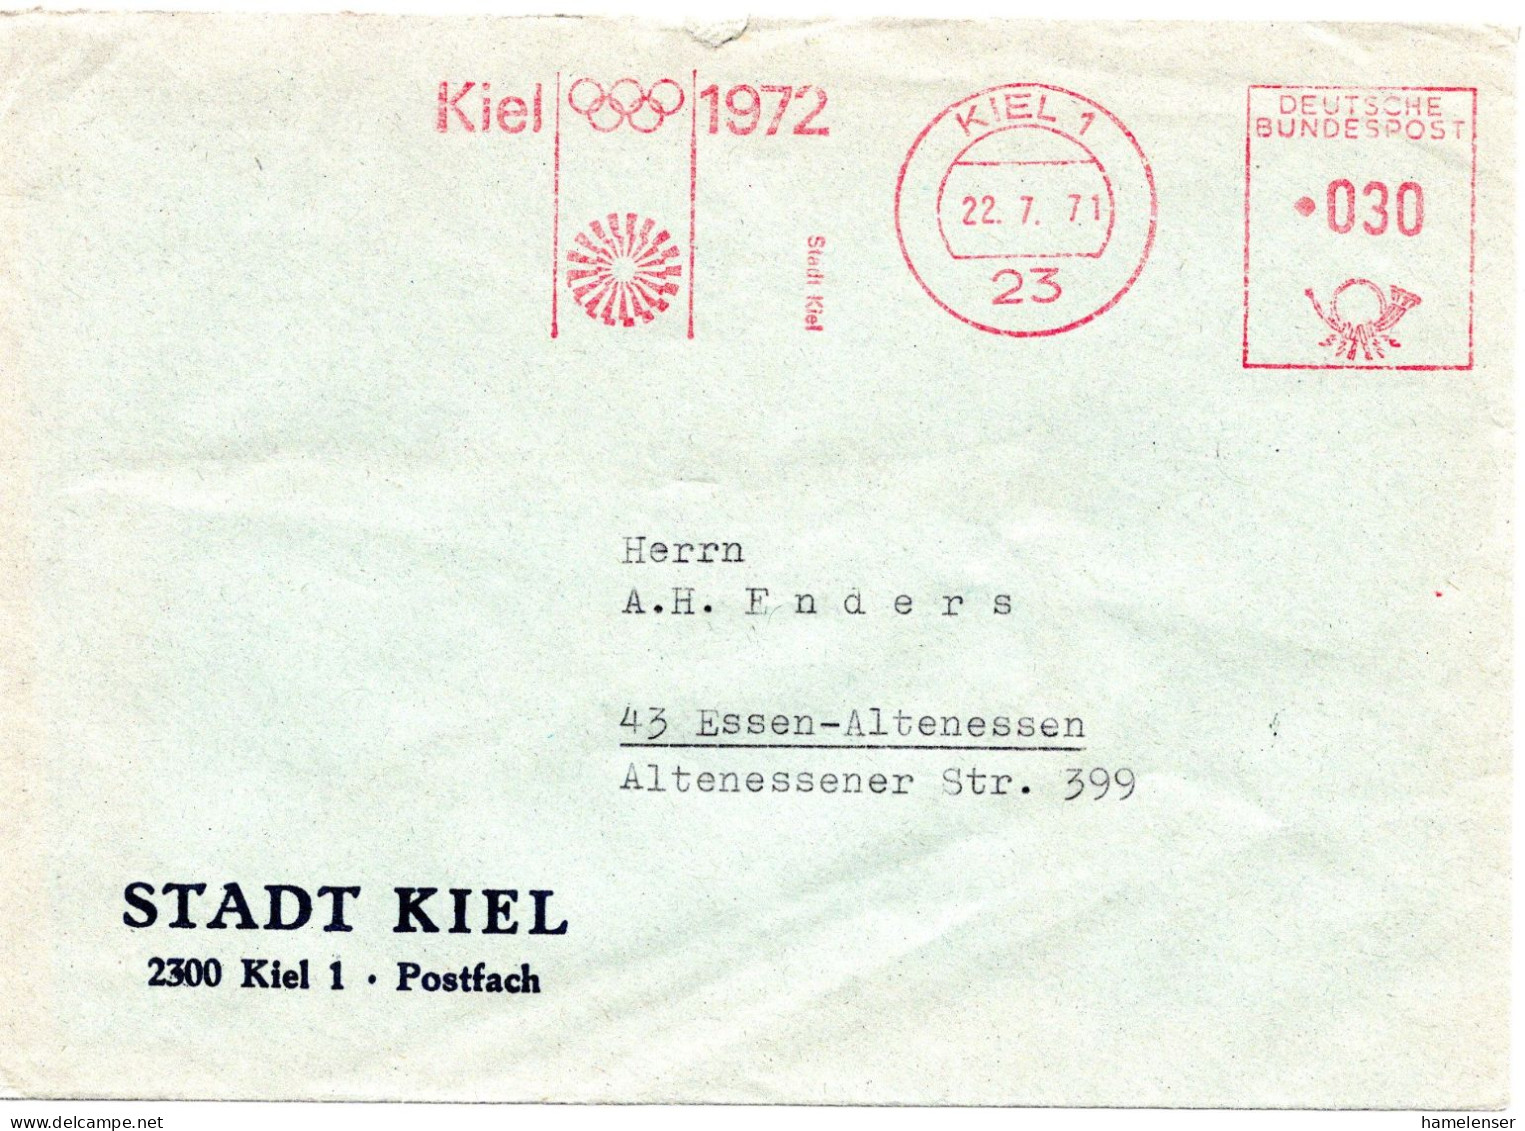 57672 - Bund - 1971 - 30Pfg AbsFreistpl KIEL - KIEL 1972 STADT KIEL -> Essen - Sommer 1972: München